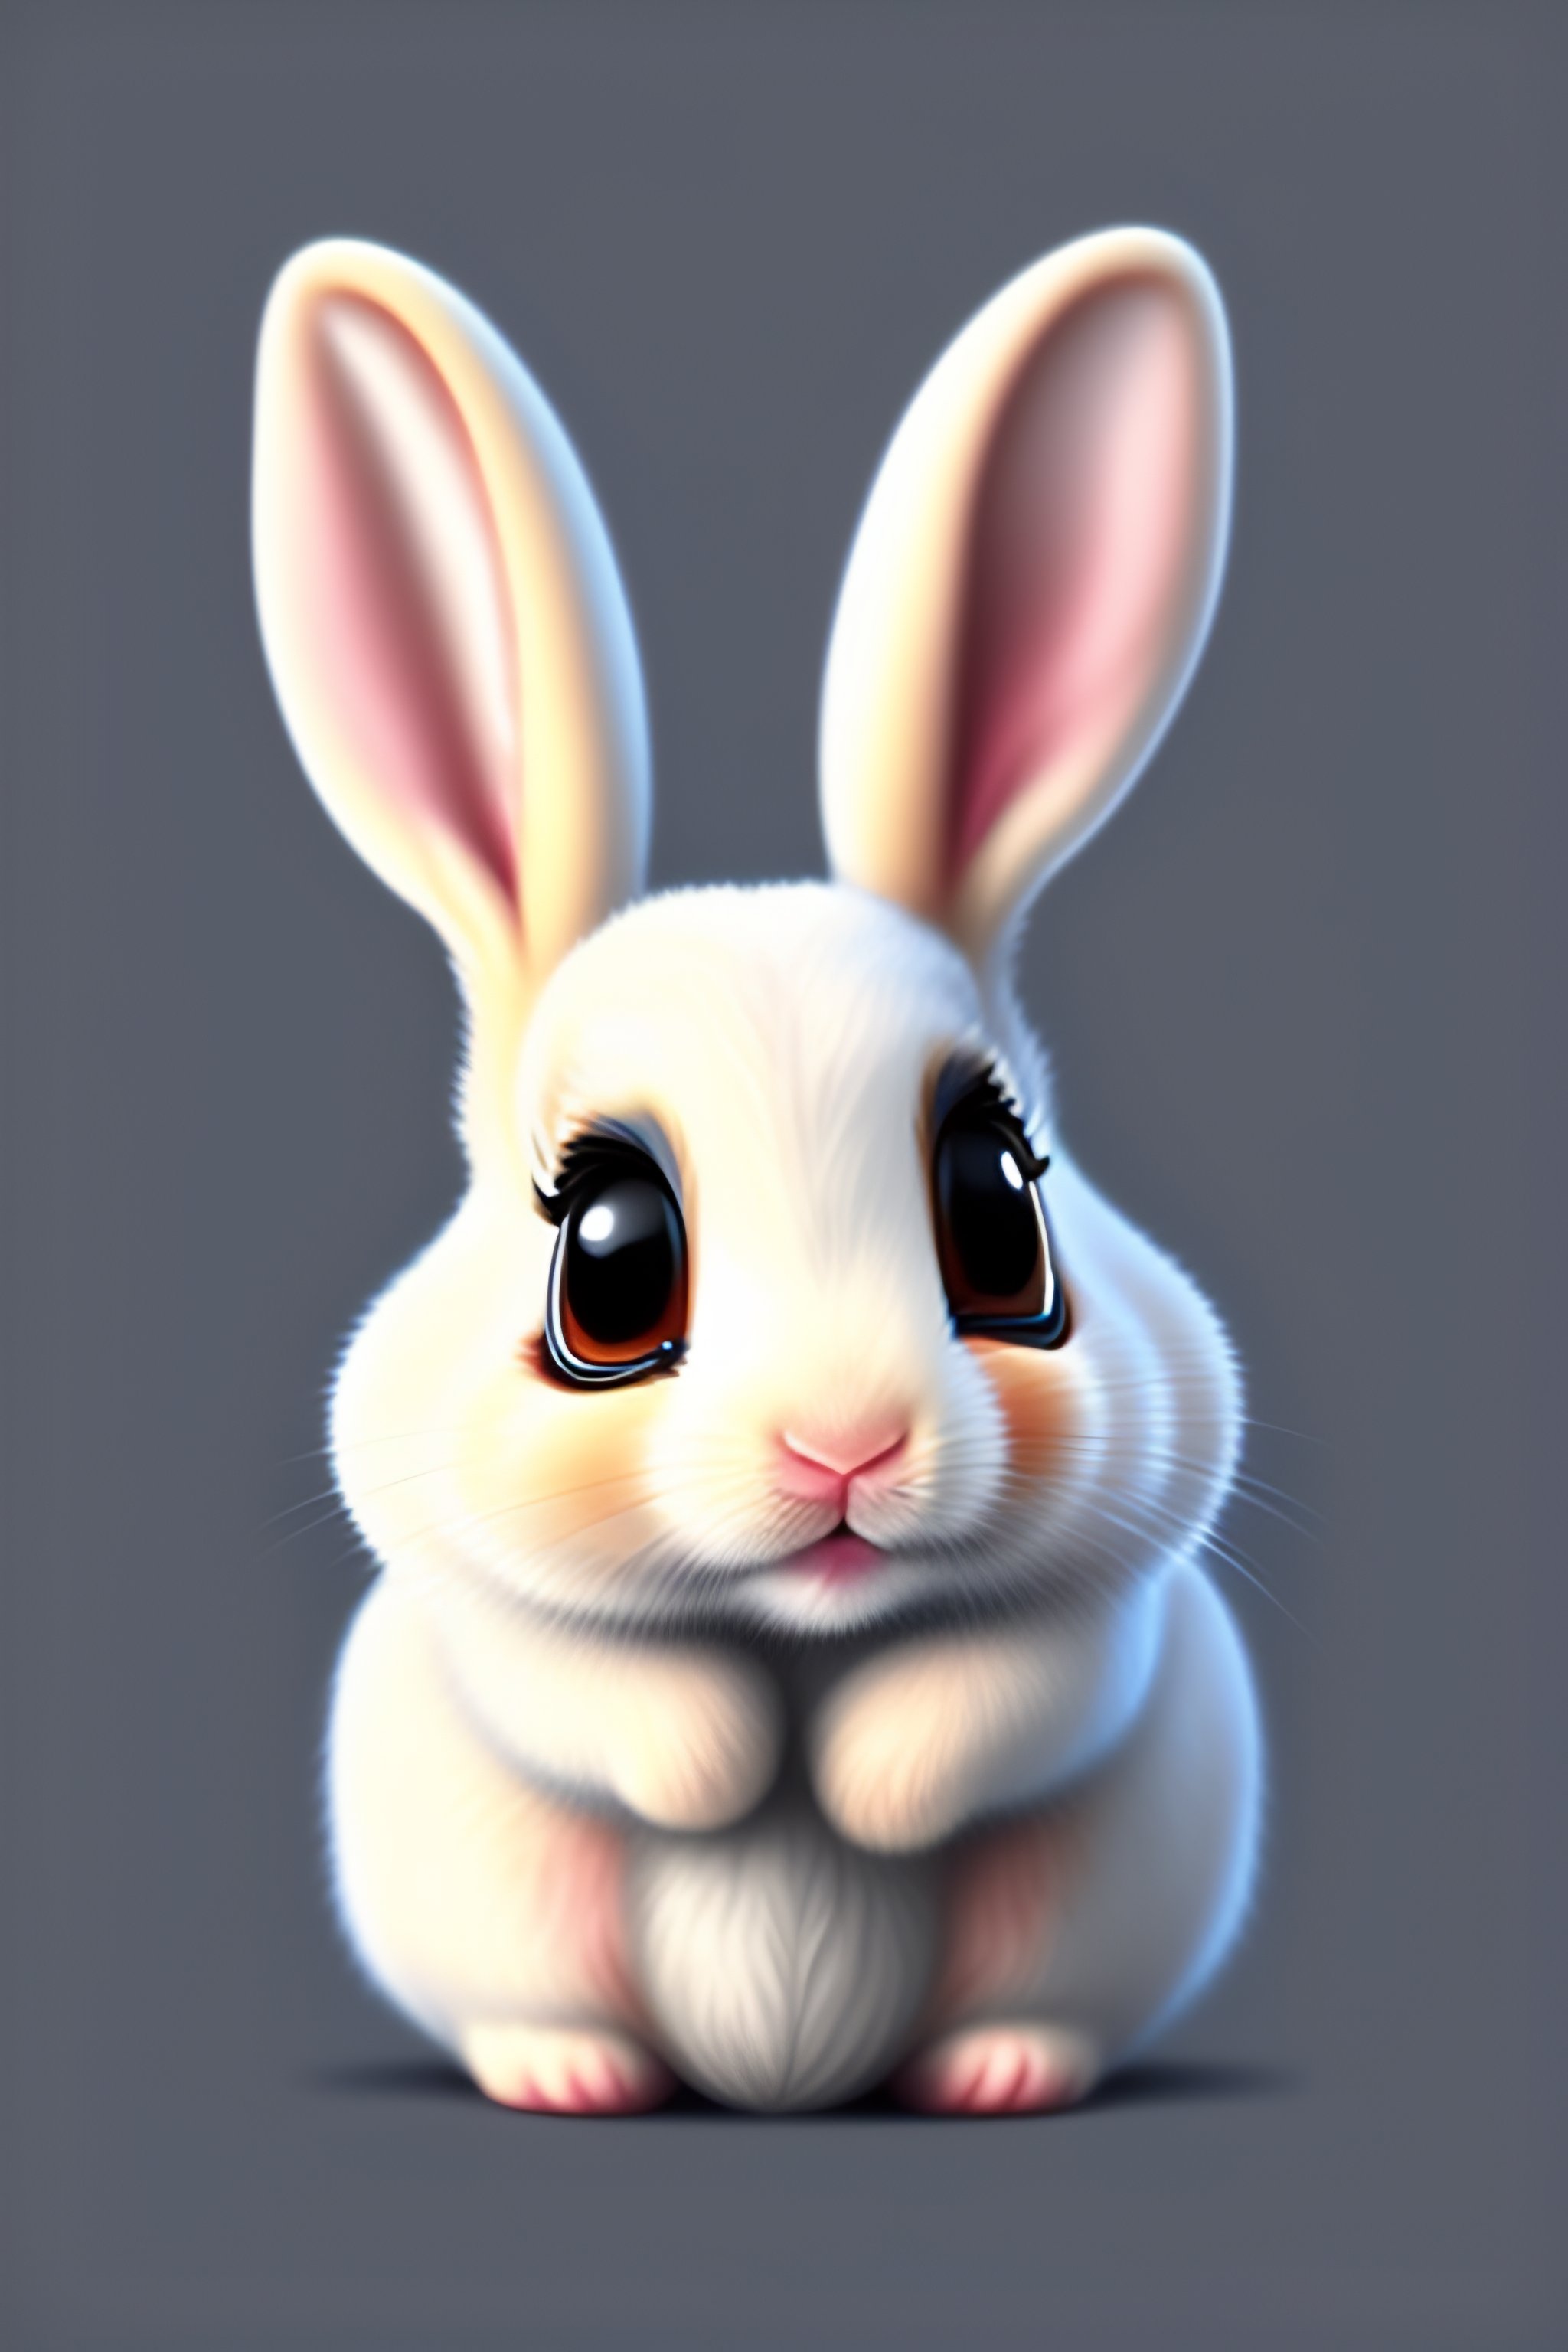 baby rabbit cartoon